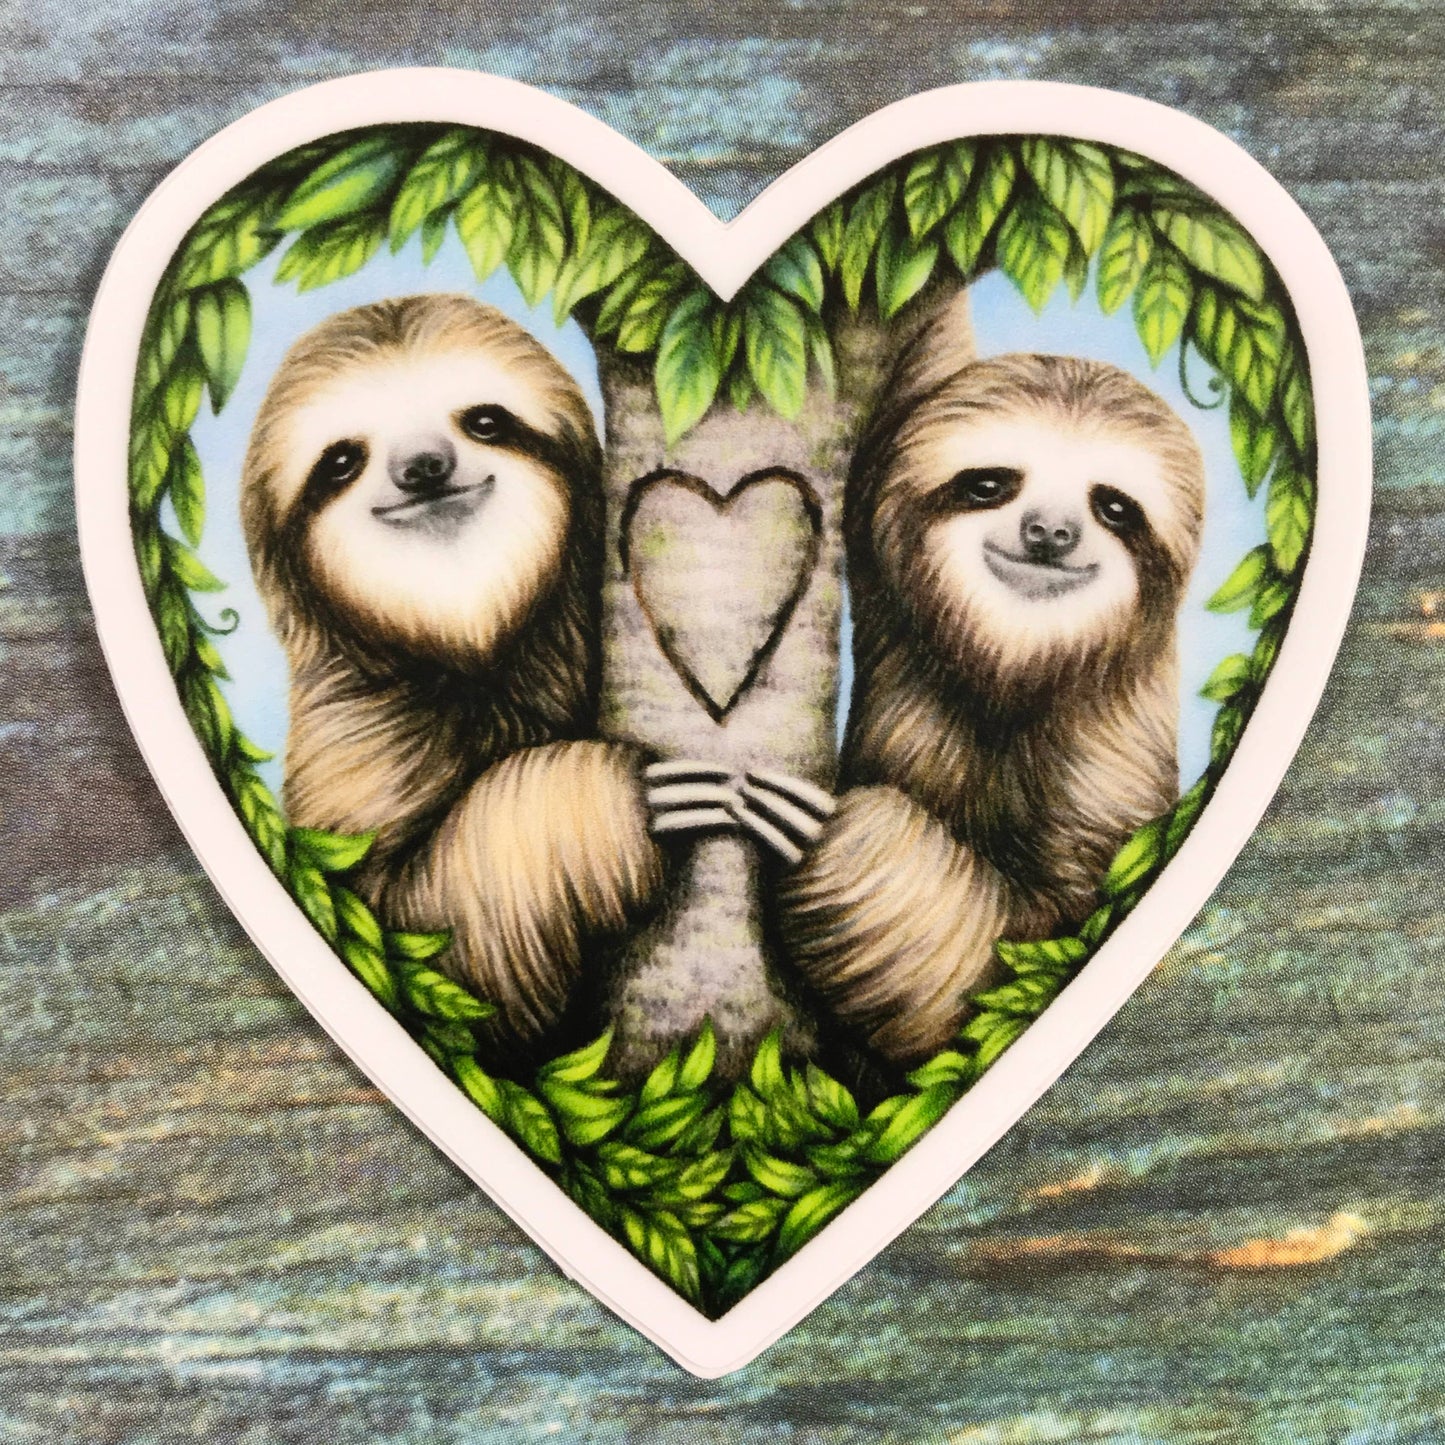 Abundance Illustration - Sloth heart sticker